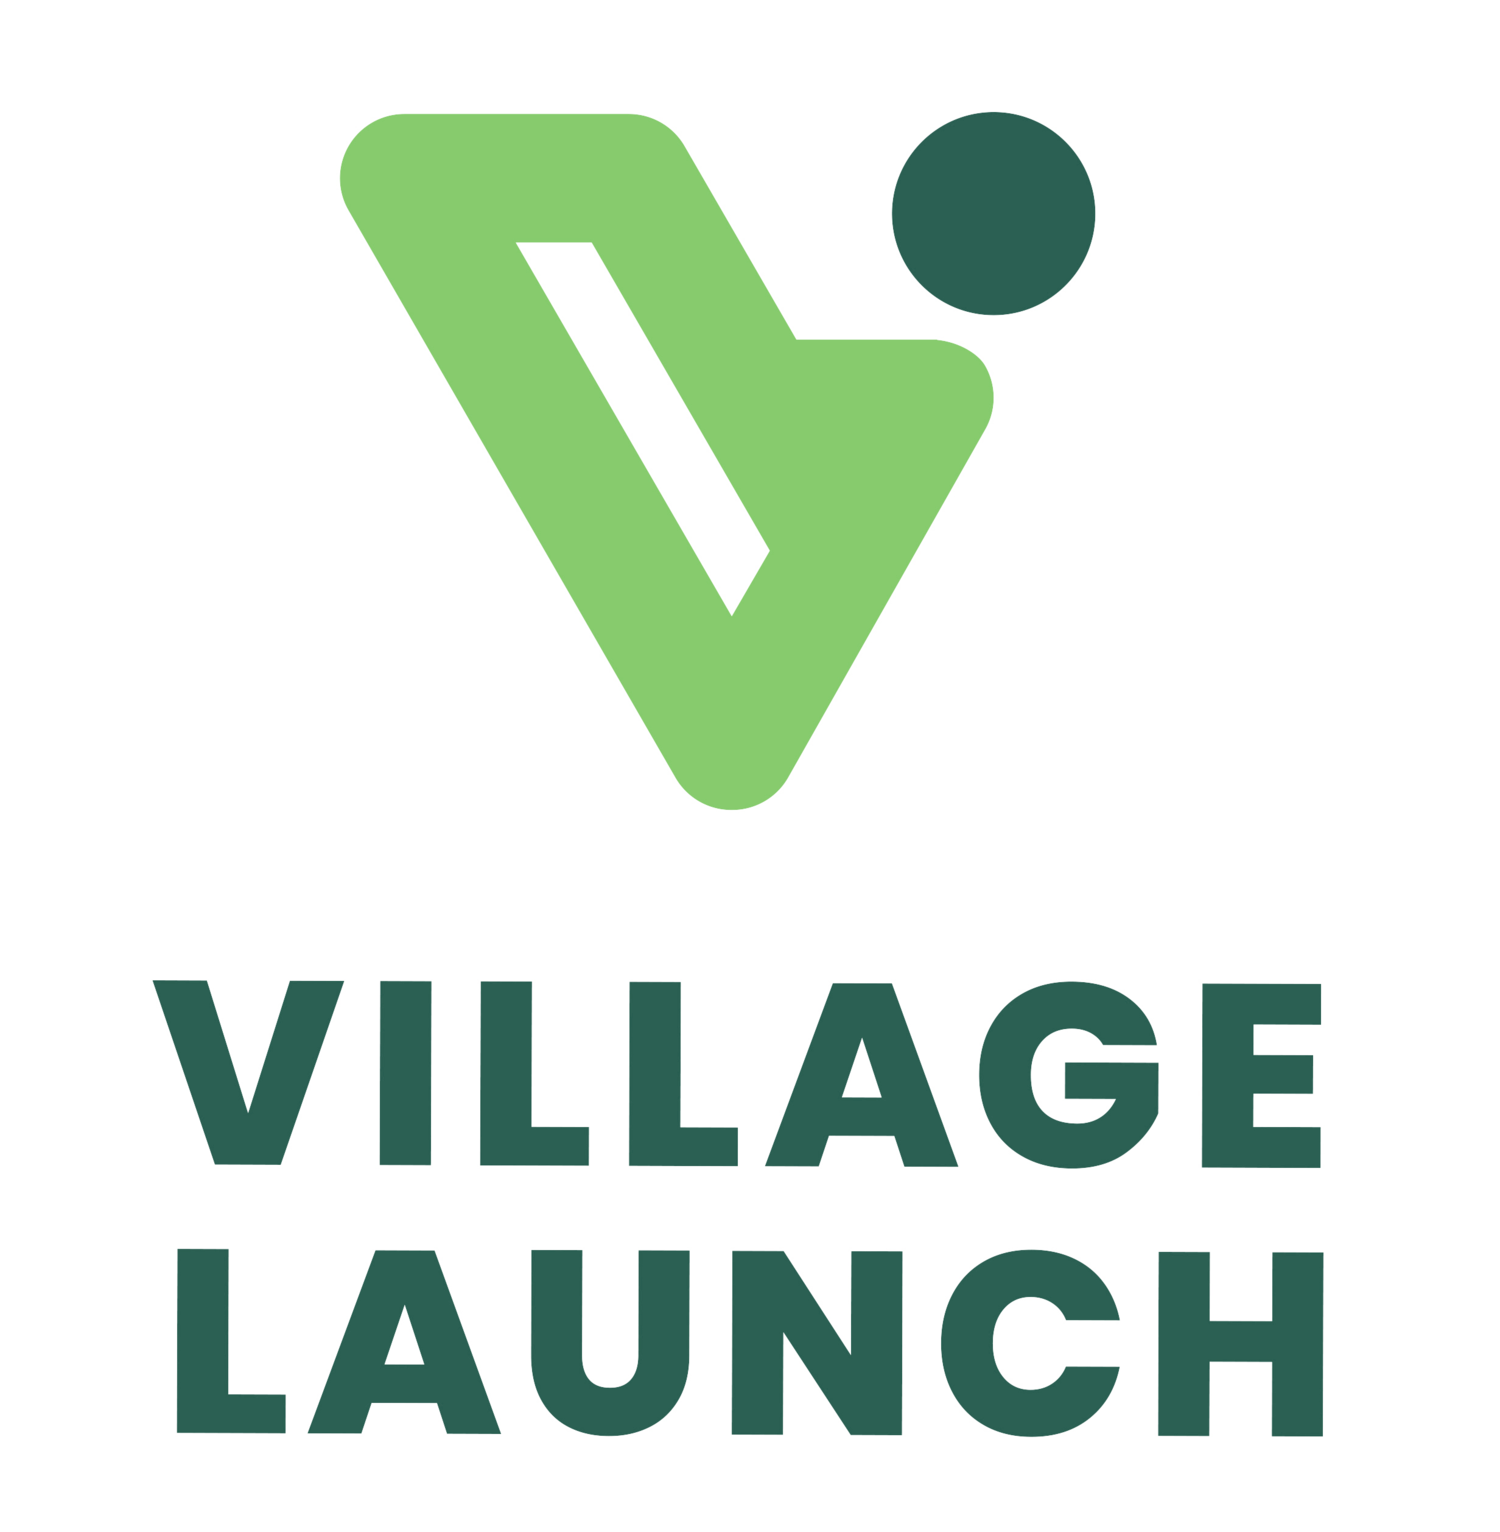 Village Launch